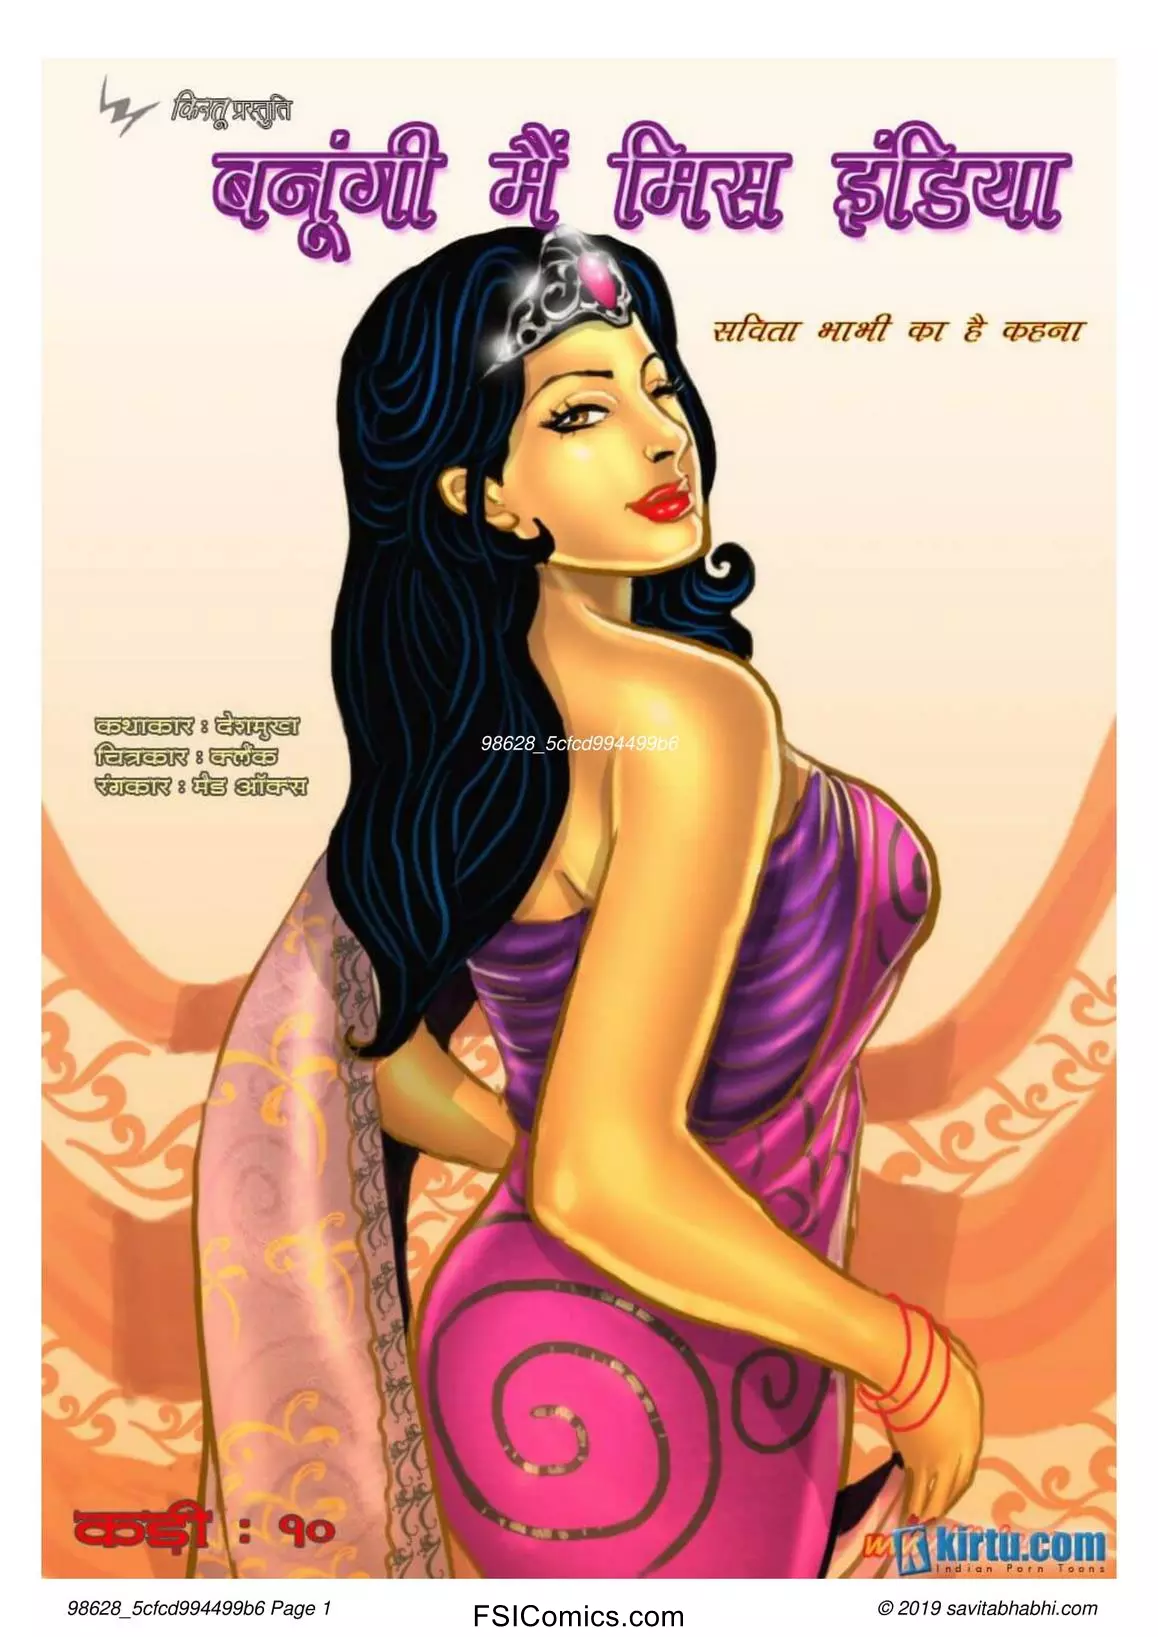 Savita Bhabhi Sexy Cartoon Hind - Savita Bhabhi - Free Sexy Indian Comics - FSI Comics